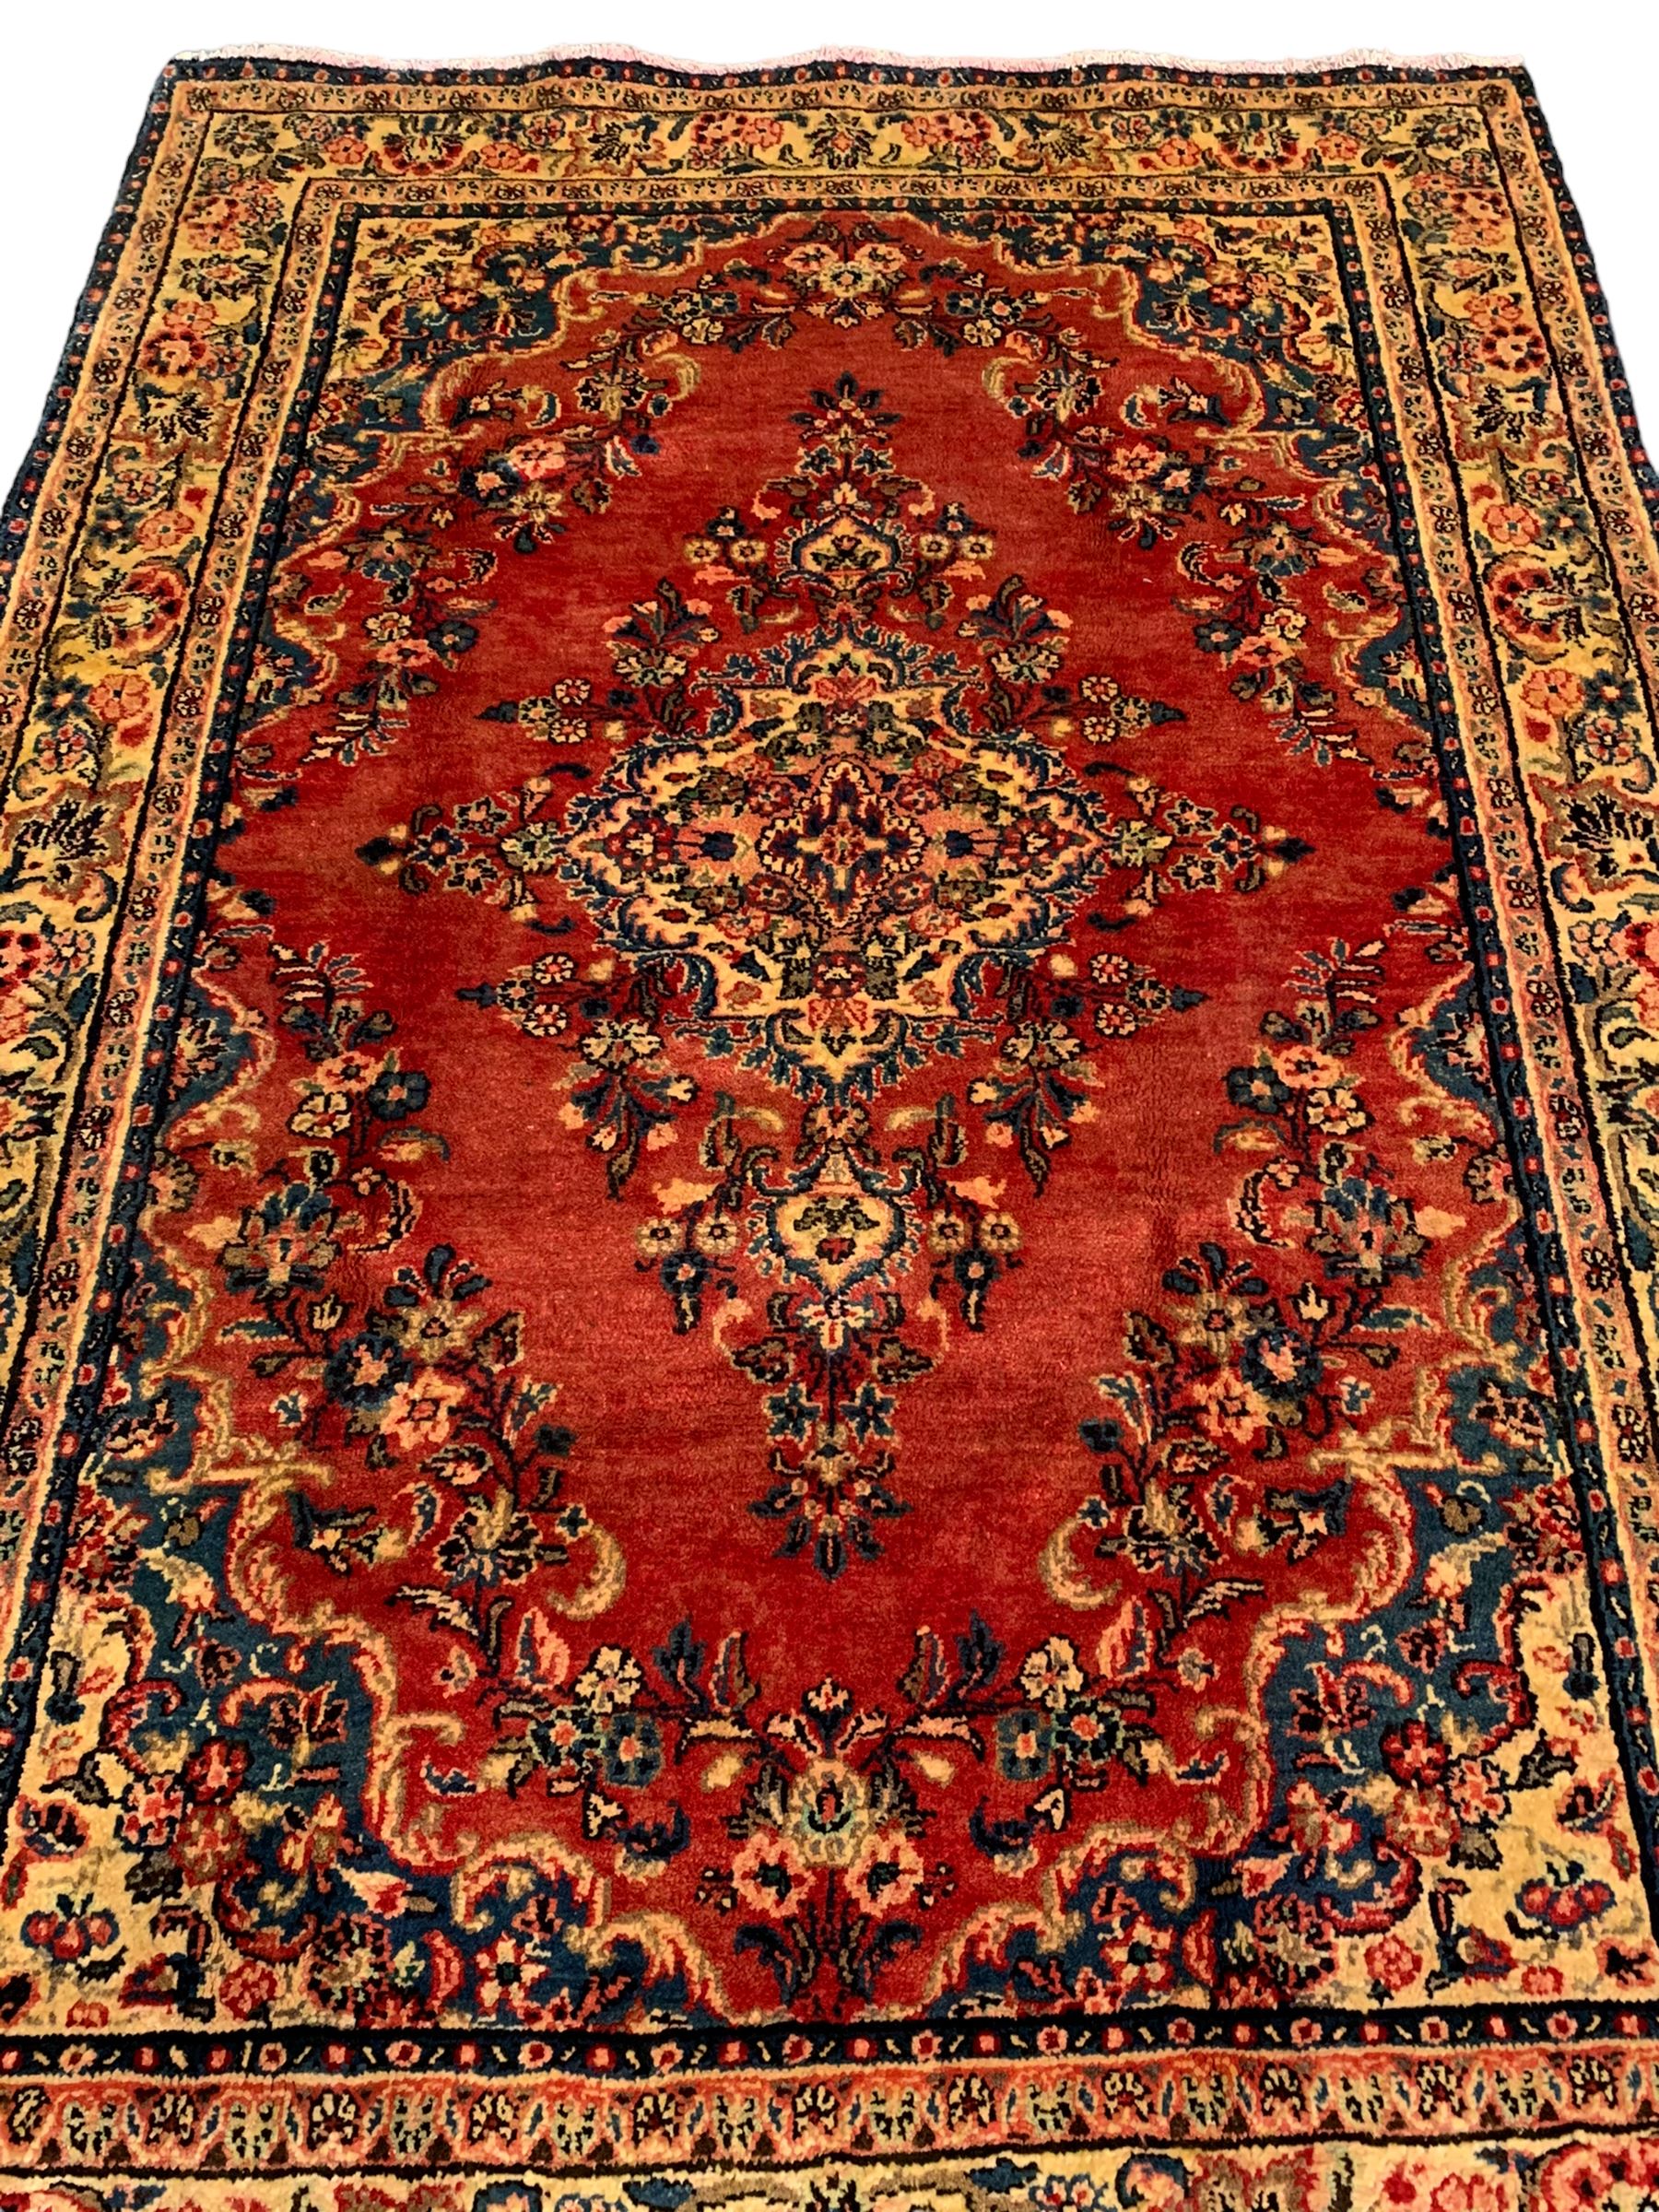 Persian crimson ground rug - Image 2 of 8